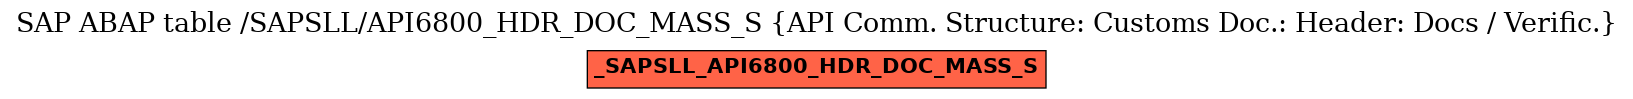 E-R Diagram for table /SAPSLL/API6800_HDR_DOC_MASS_S (API Comm. Structure: Customs Doc.: Header: Docs / Verific.)